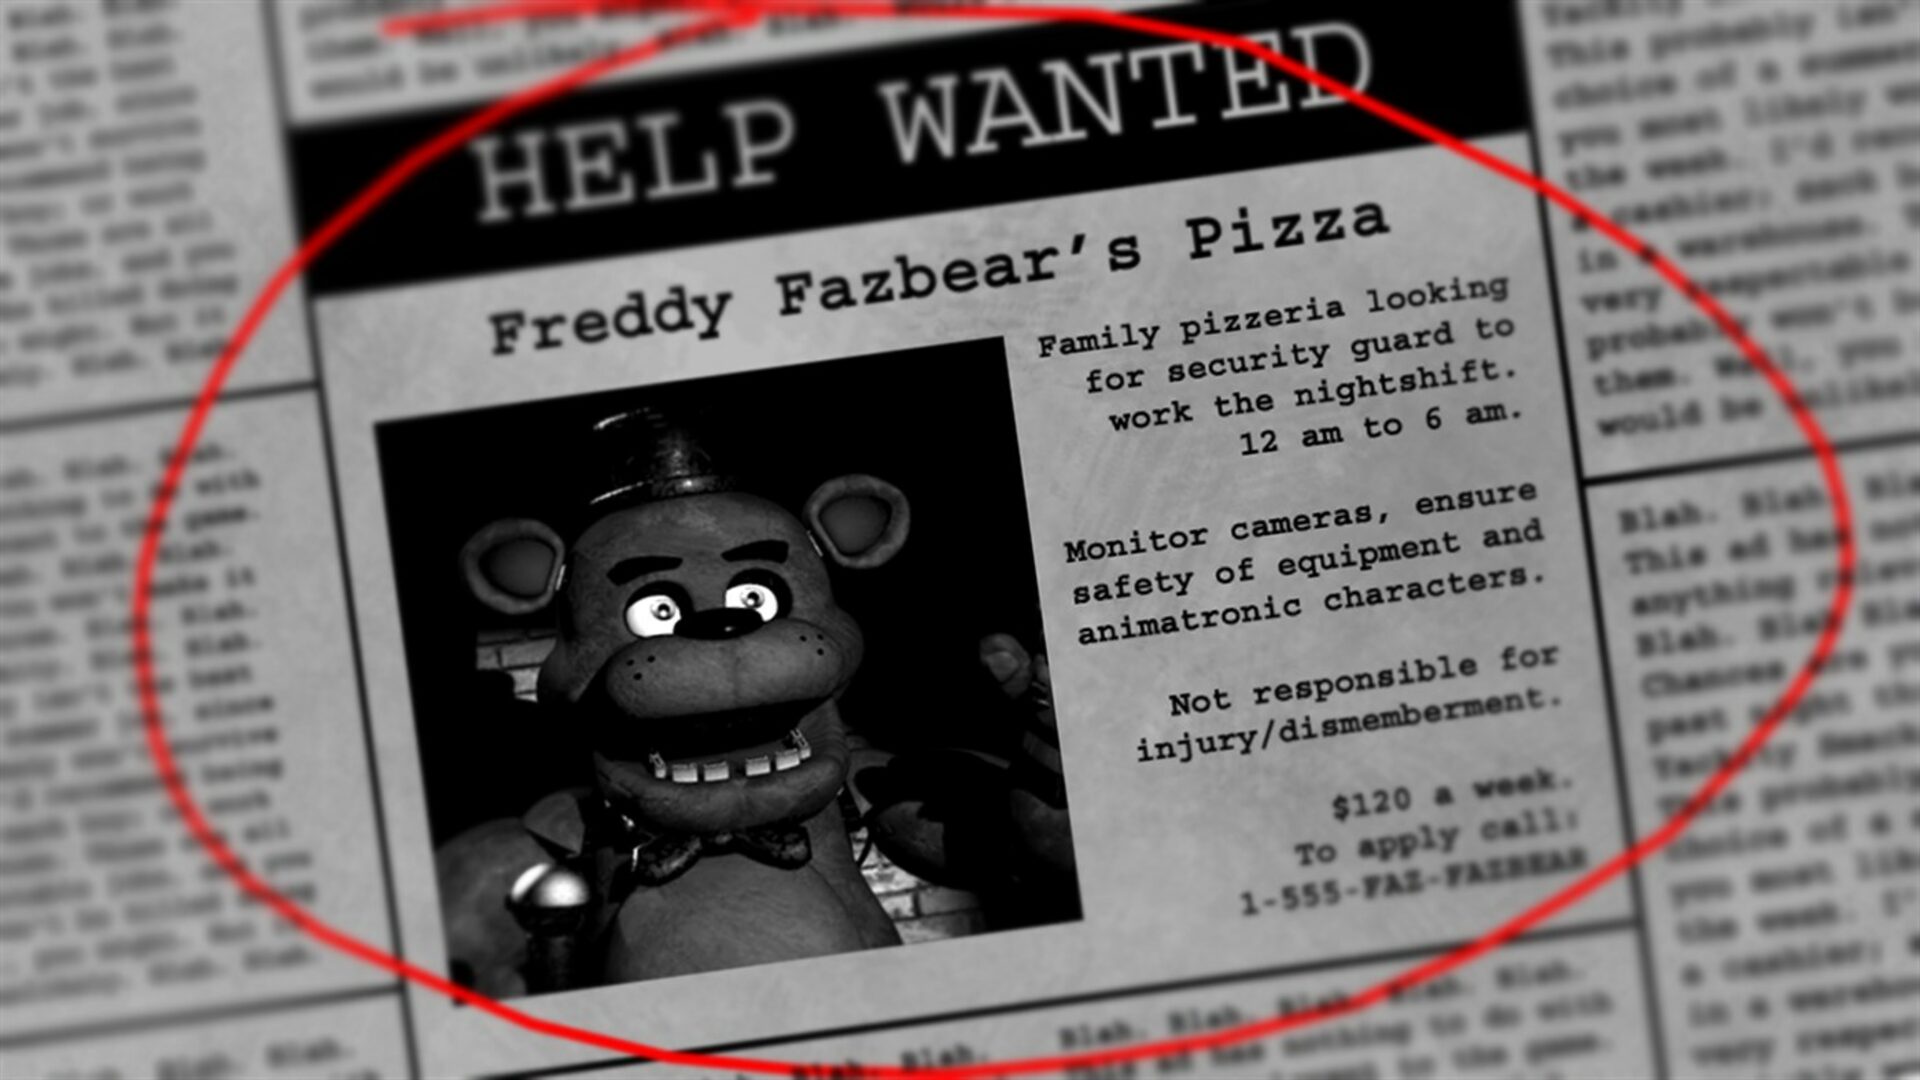 Five Nights at Freddy's Help Wanted Xbox One Mídia Digital